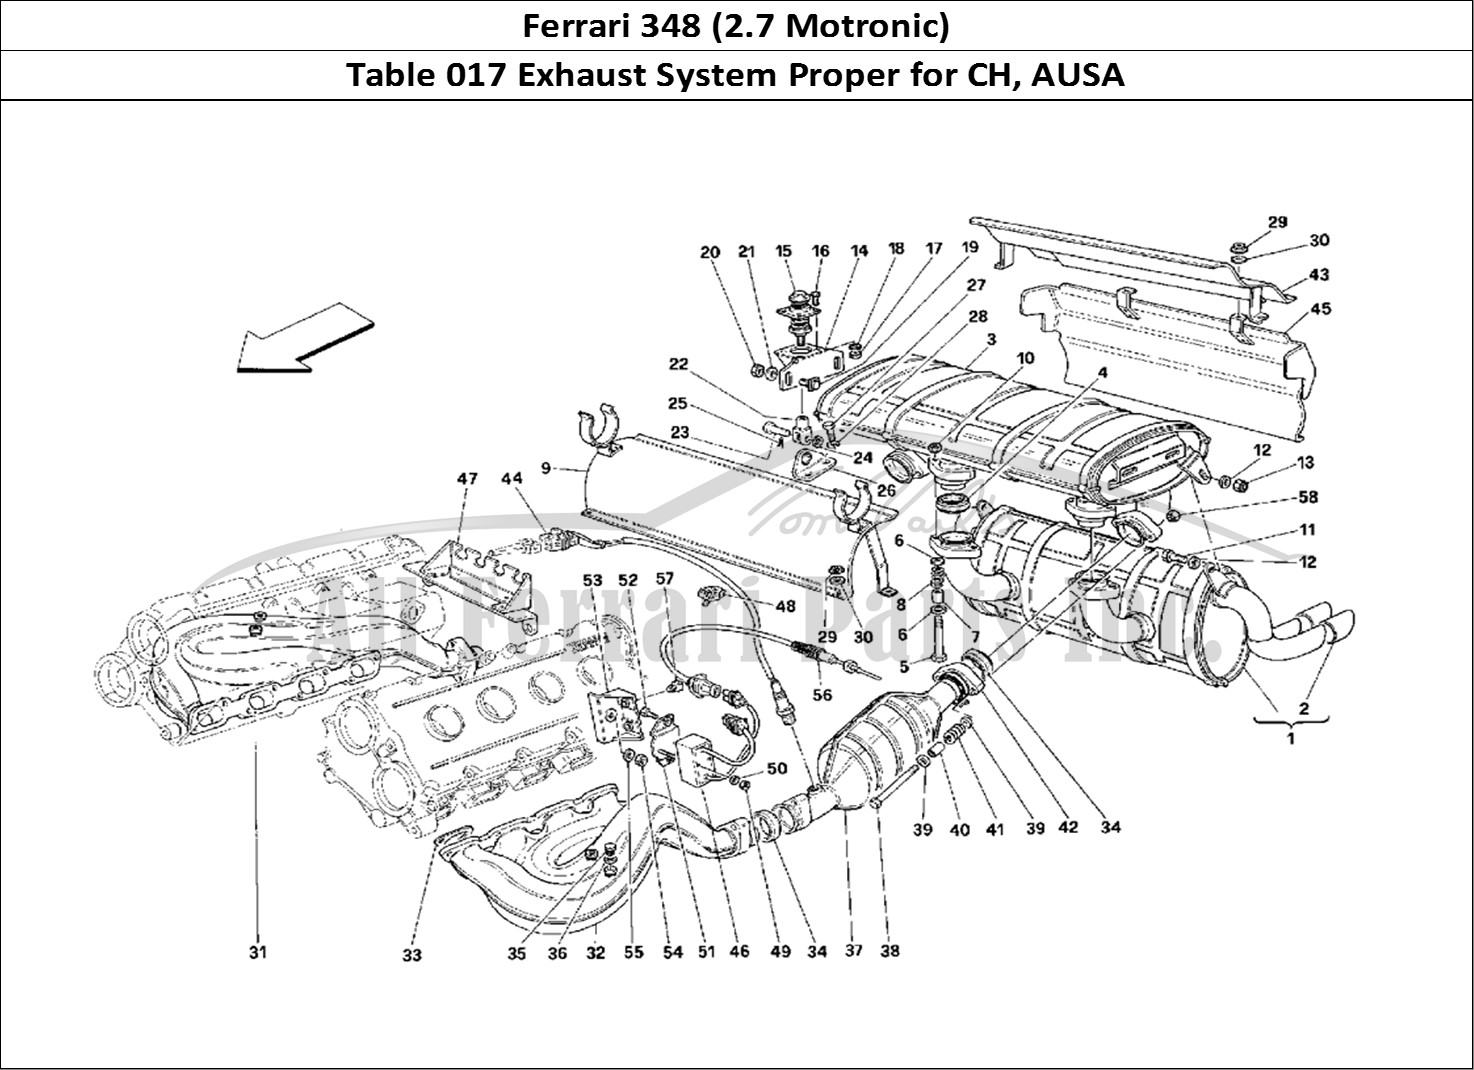 Ferrari Parts Ferrari 348 (2.7 Motronic) Page 017 Exhaust System -Valid for